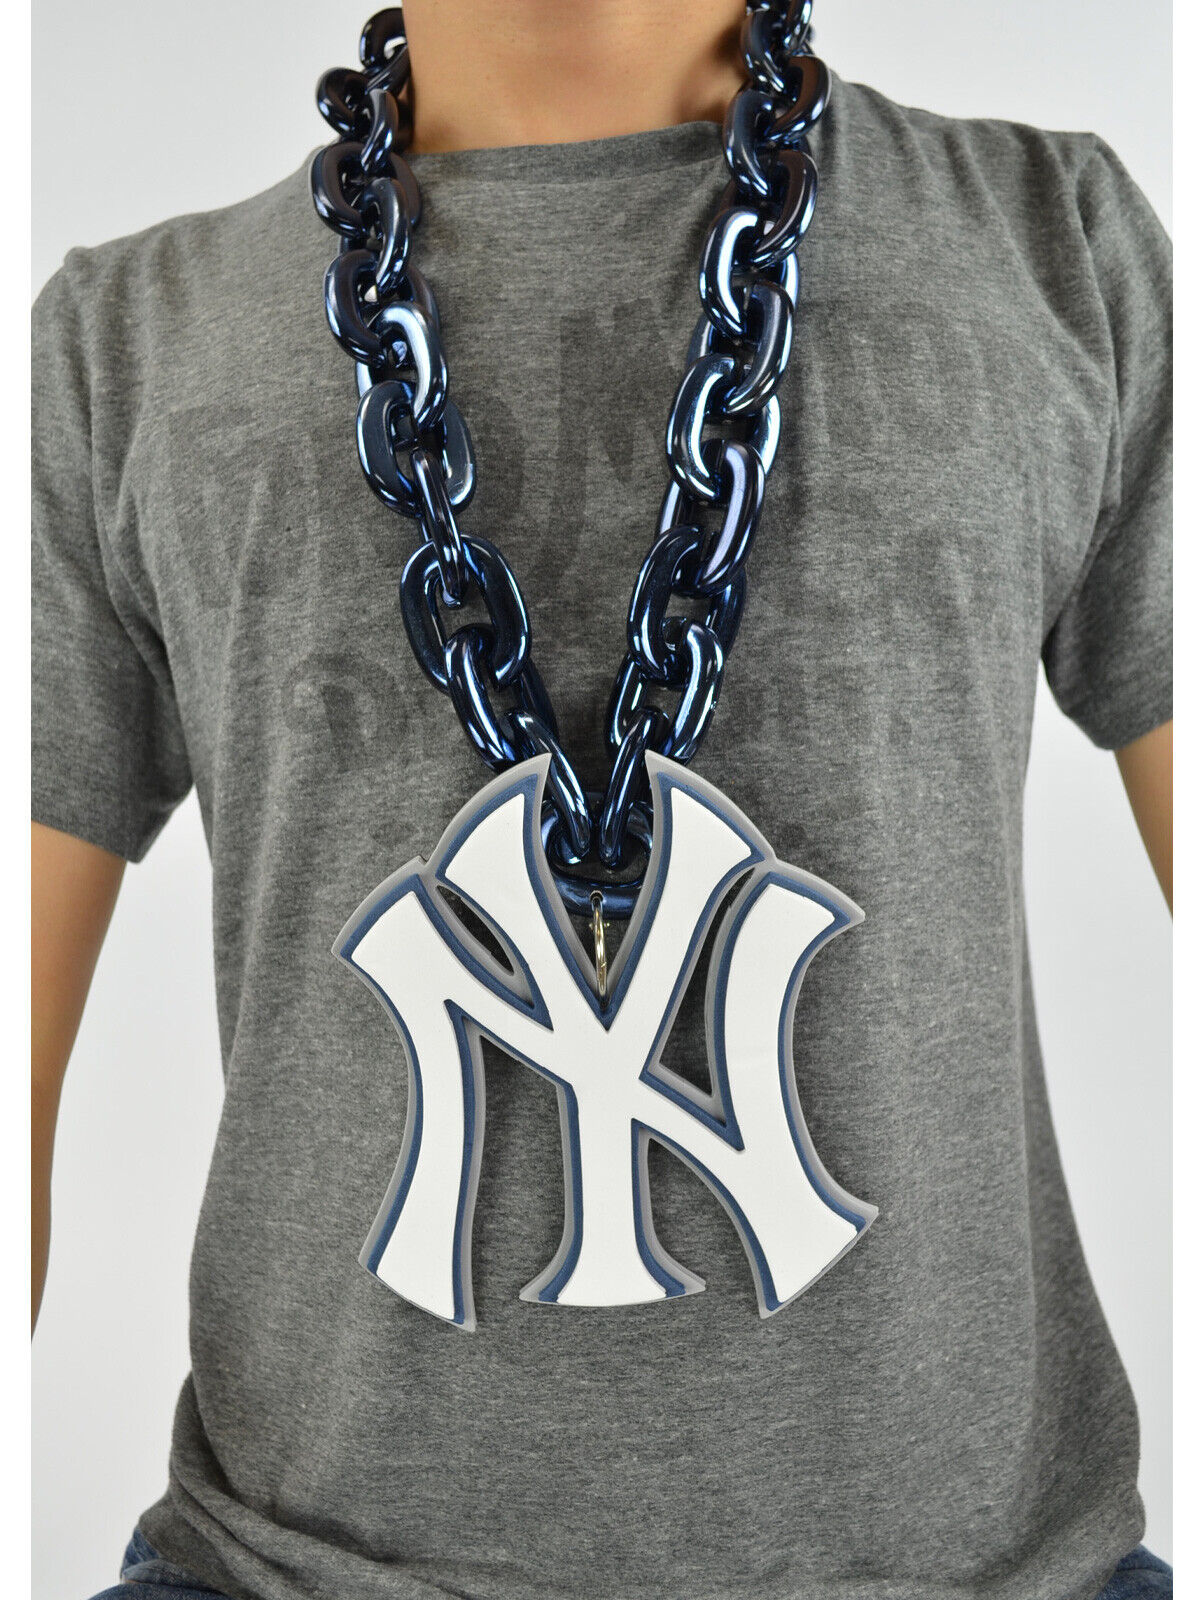 New MLB New York Yankees Navy Blue Fan Chain Necklace Foam